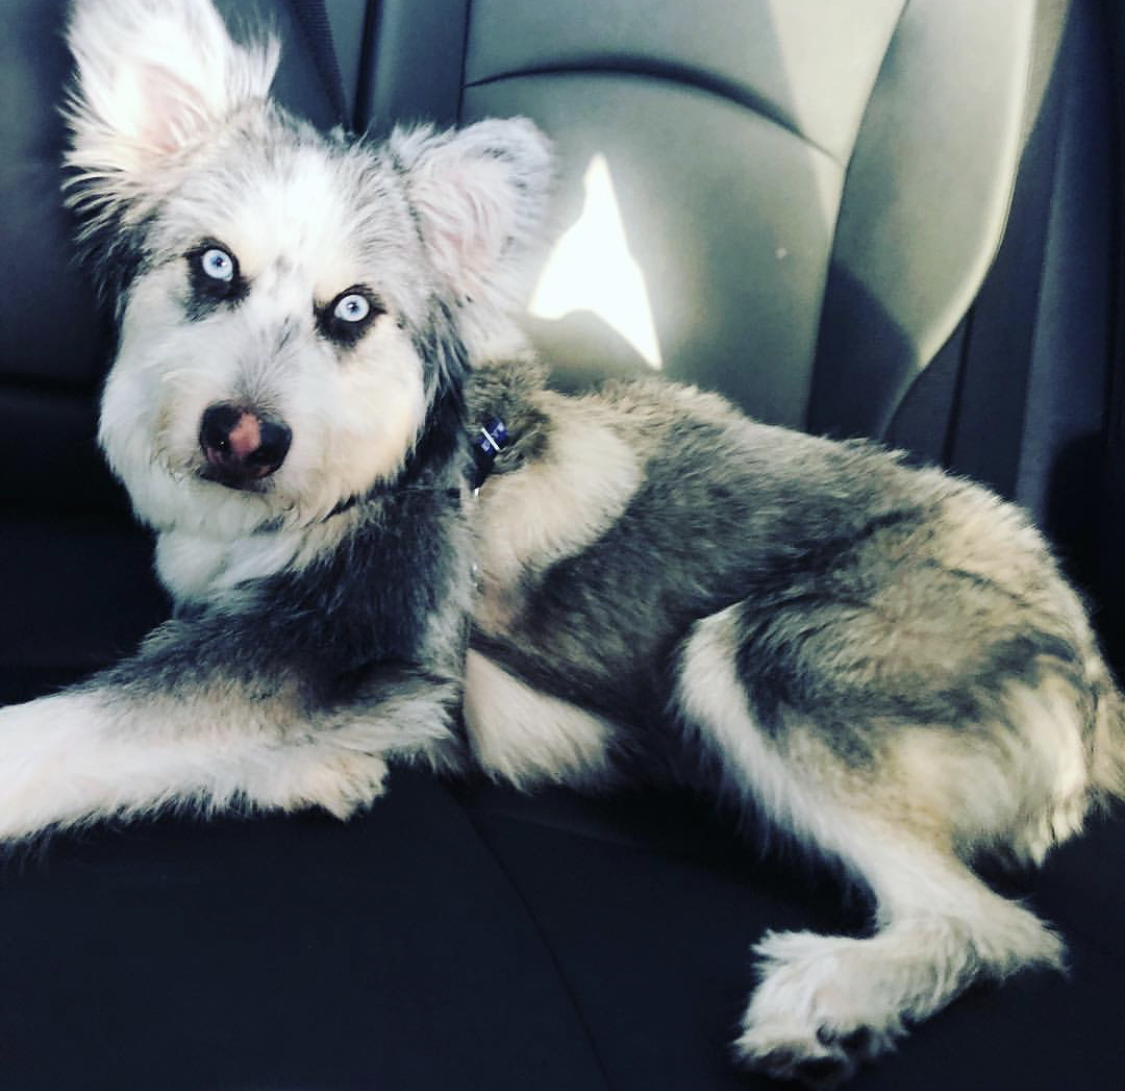 A Shih Husky lying in the backseat